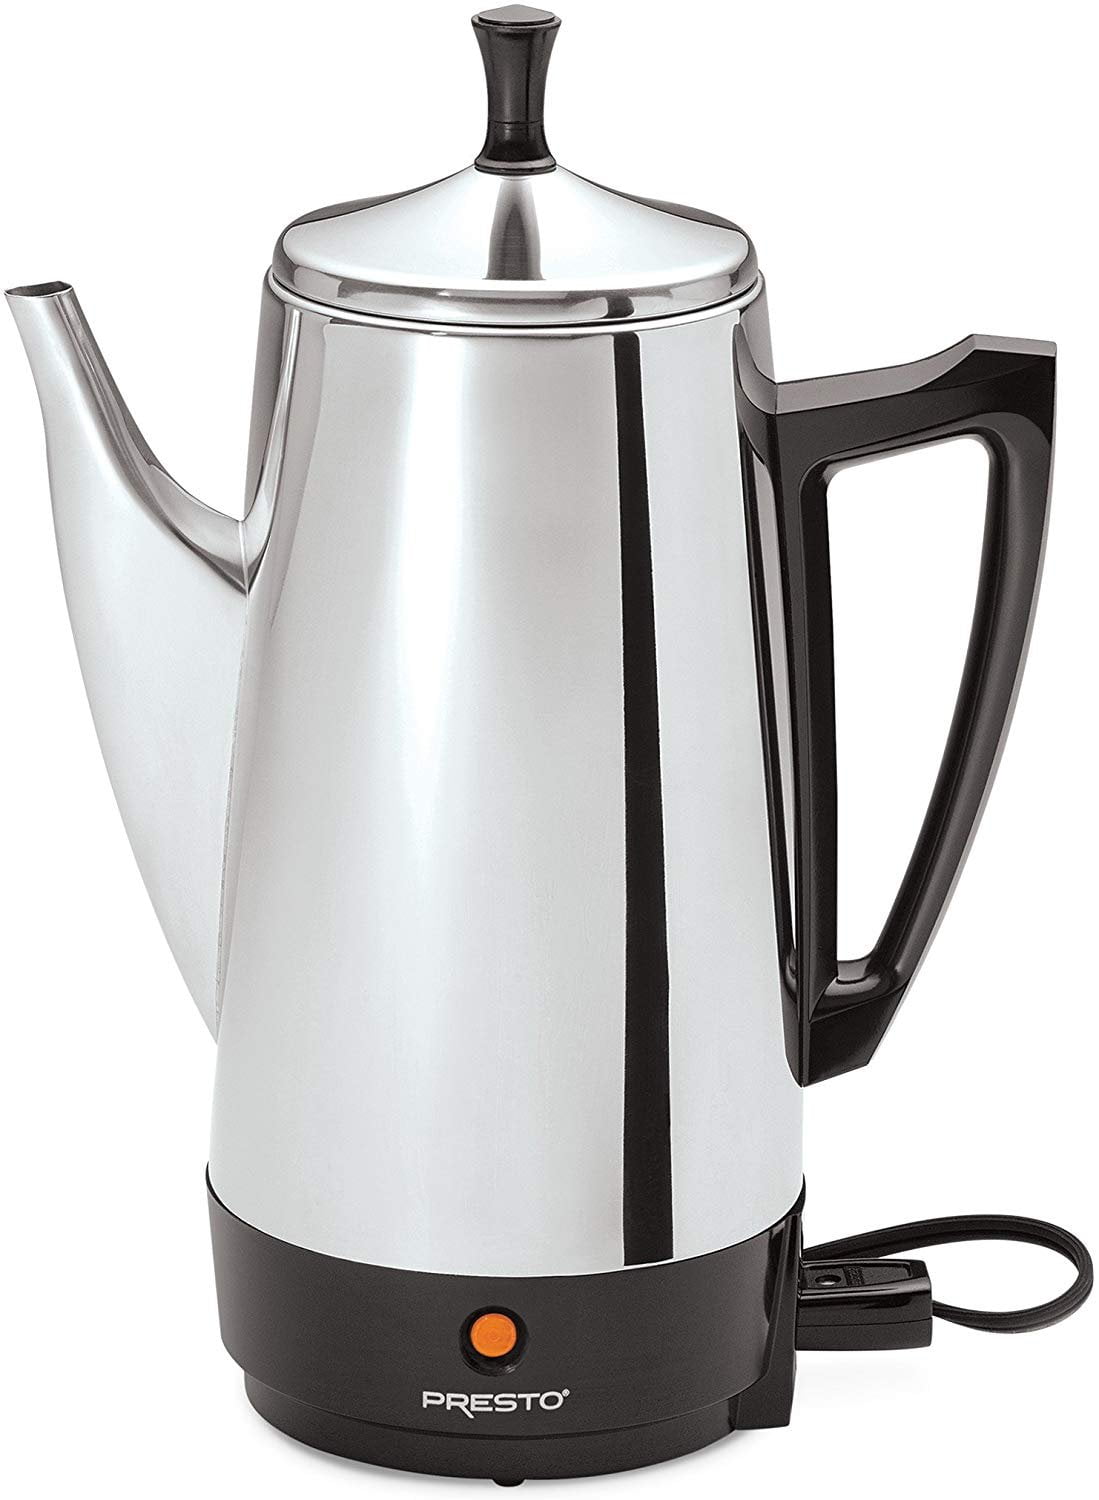  WalterDrake 12 Cup Presto 02811 Stainless Steel Coffee Maker,  CHROME: Home & Kitchen